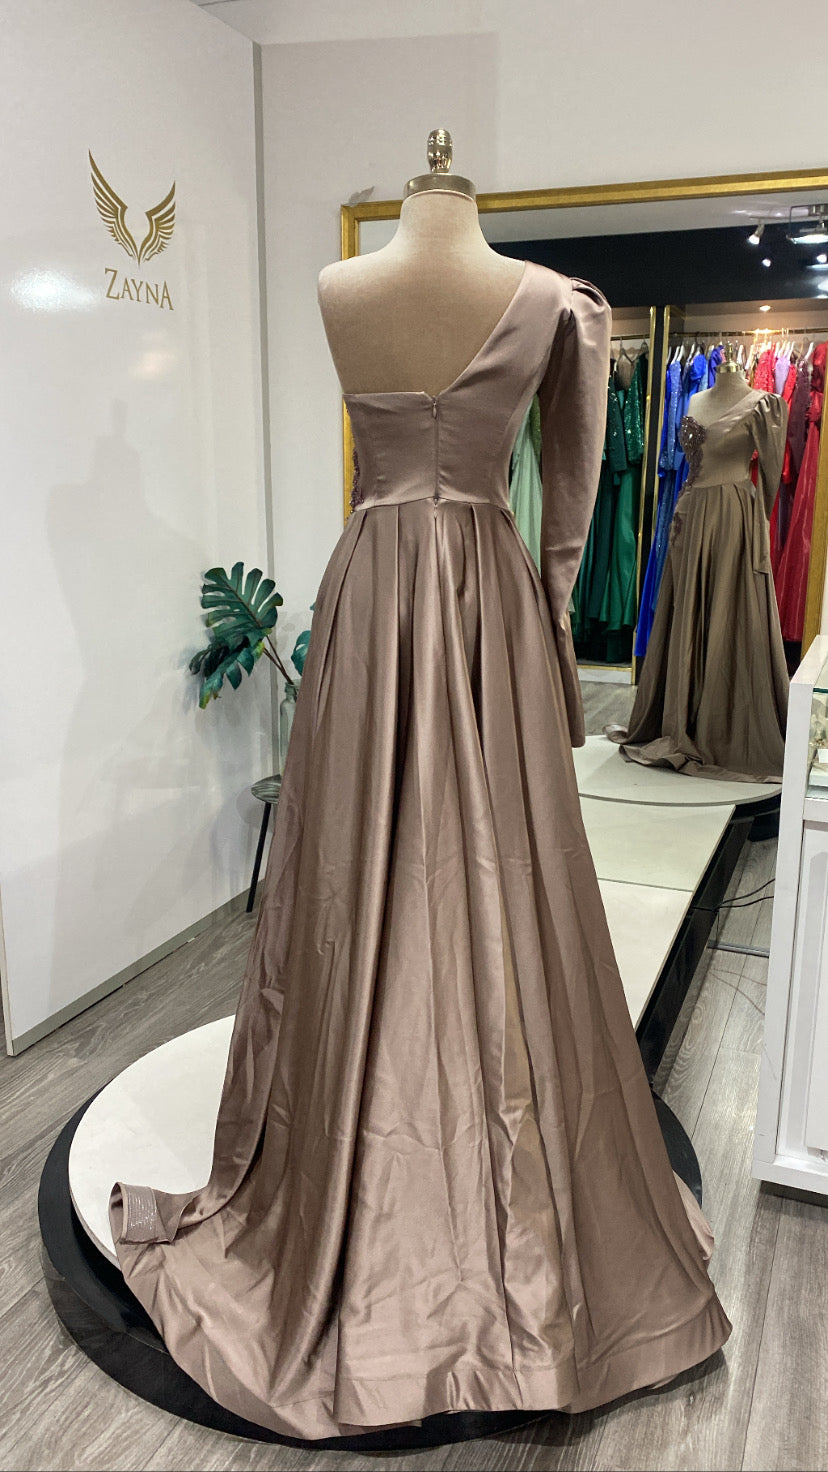 Elegant bronze dress with worked details